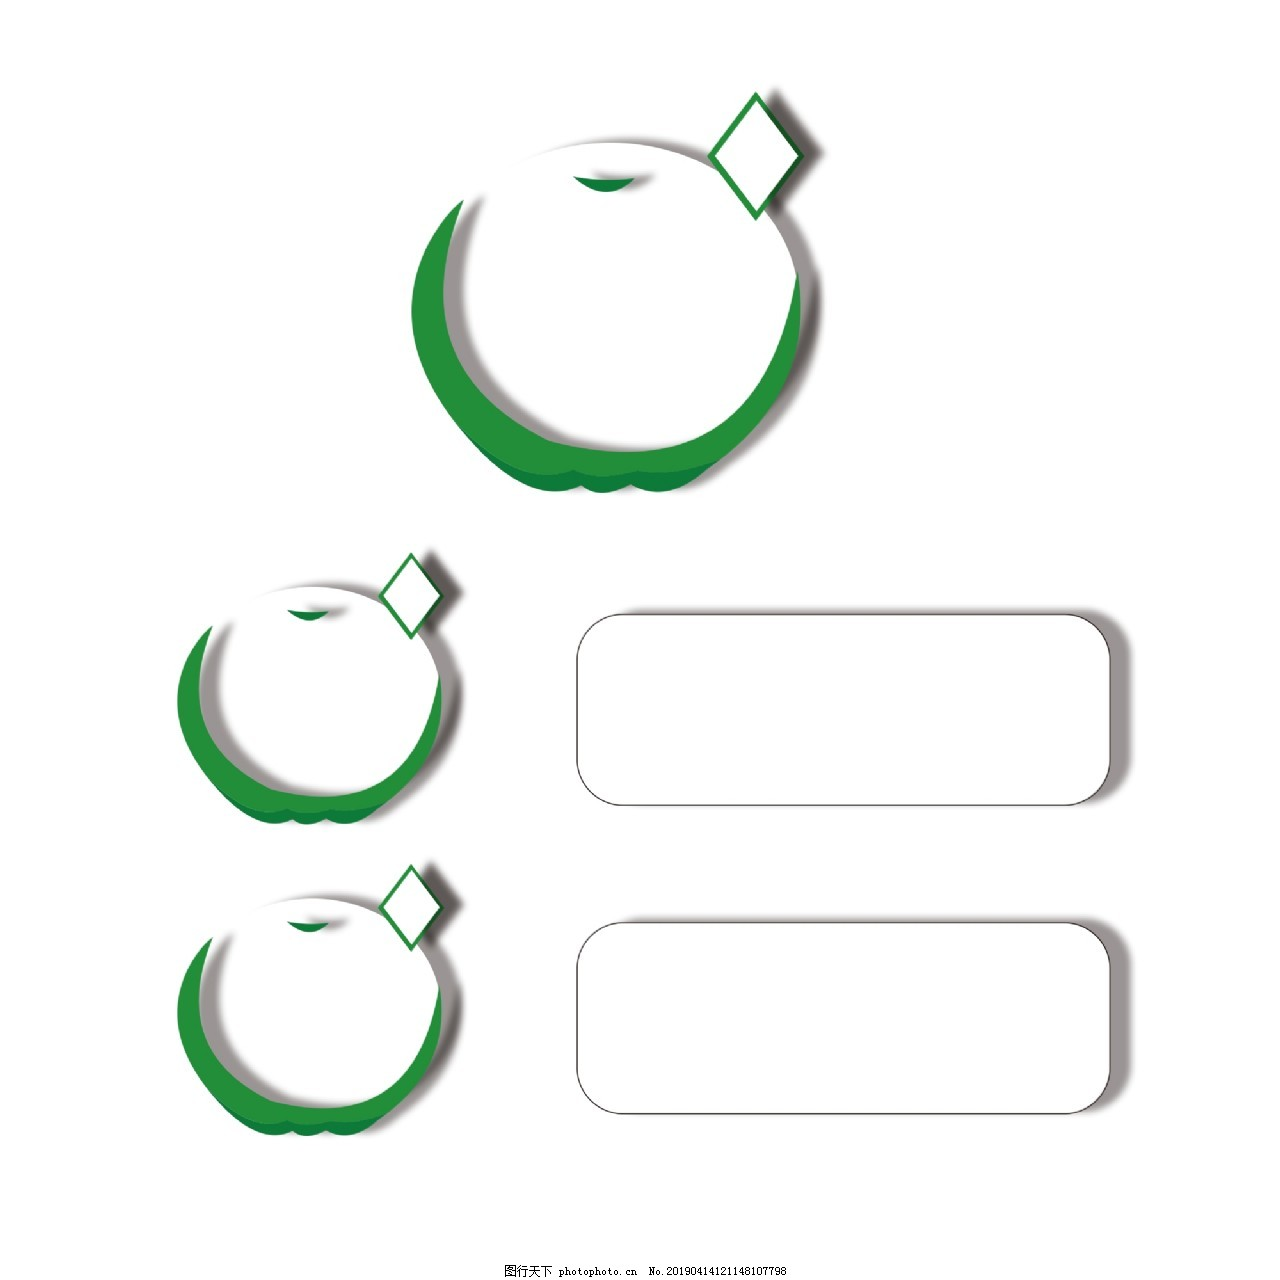 ‘~PPT苹果卡通装饰图片_PPT元素_平面创作元素-  ~’ 的图片